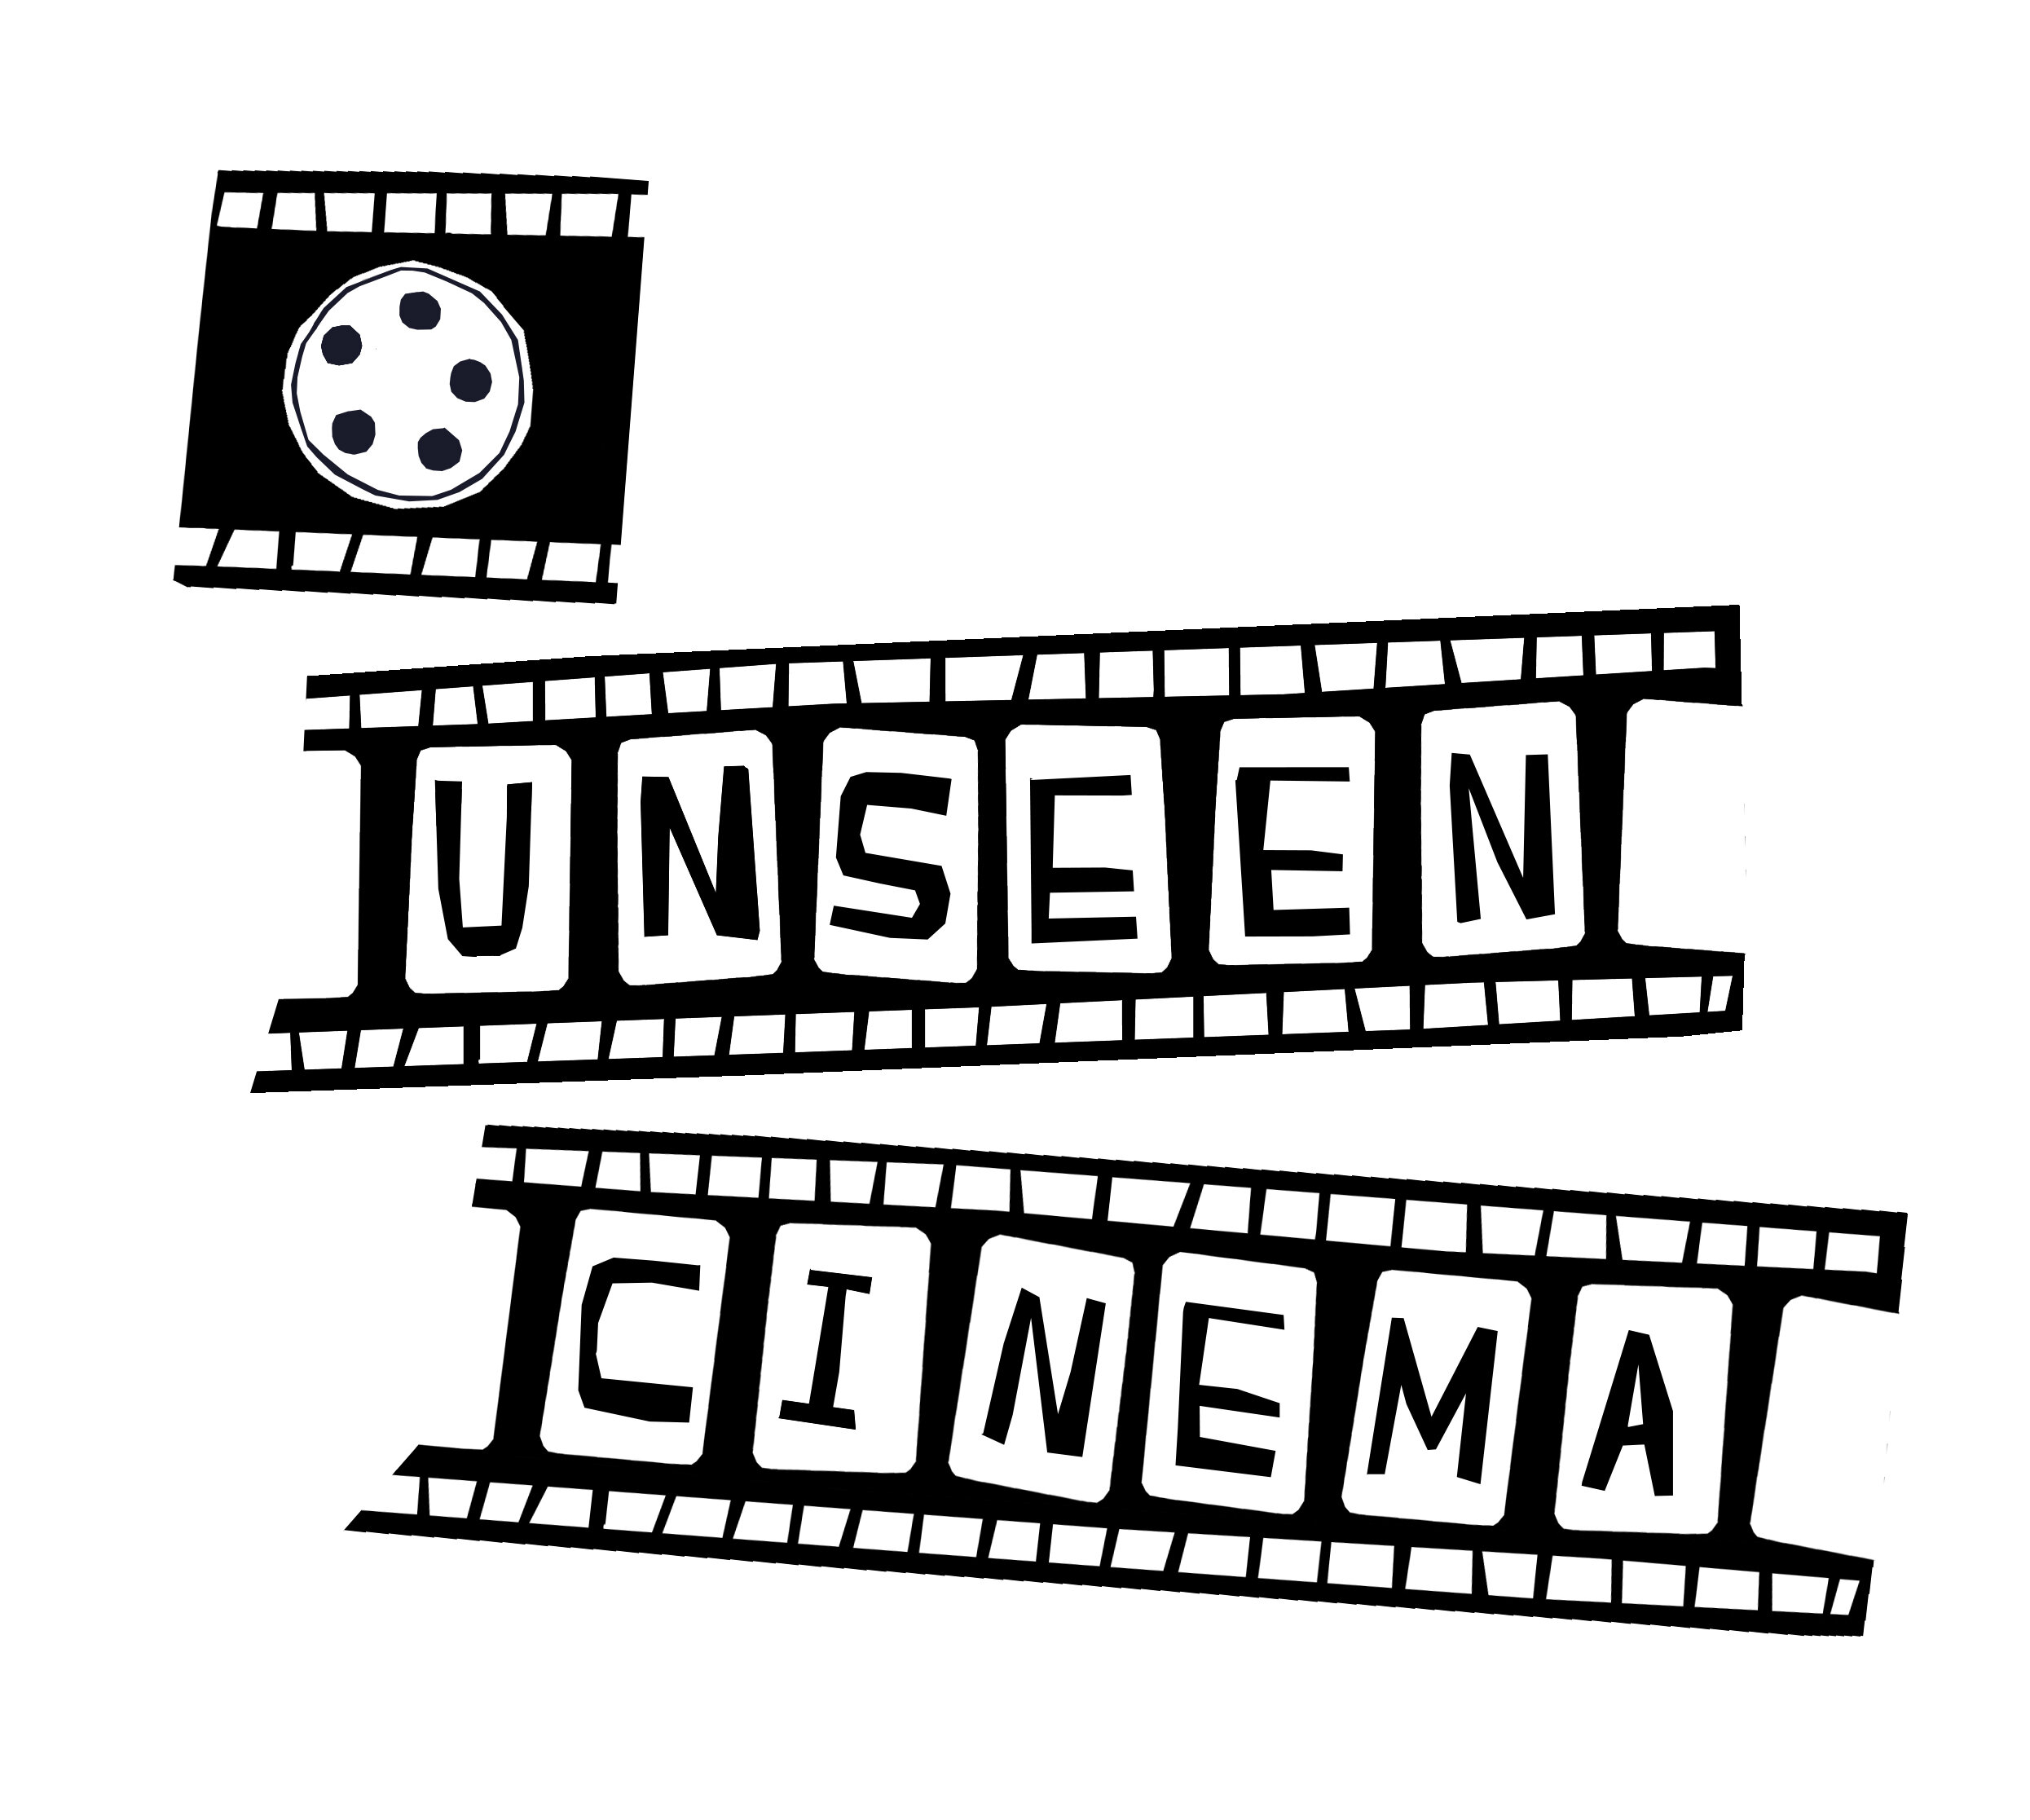 unseen cinema logo.jpg